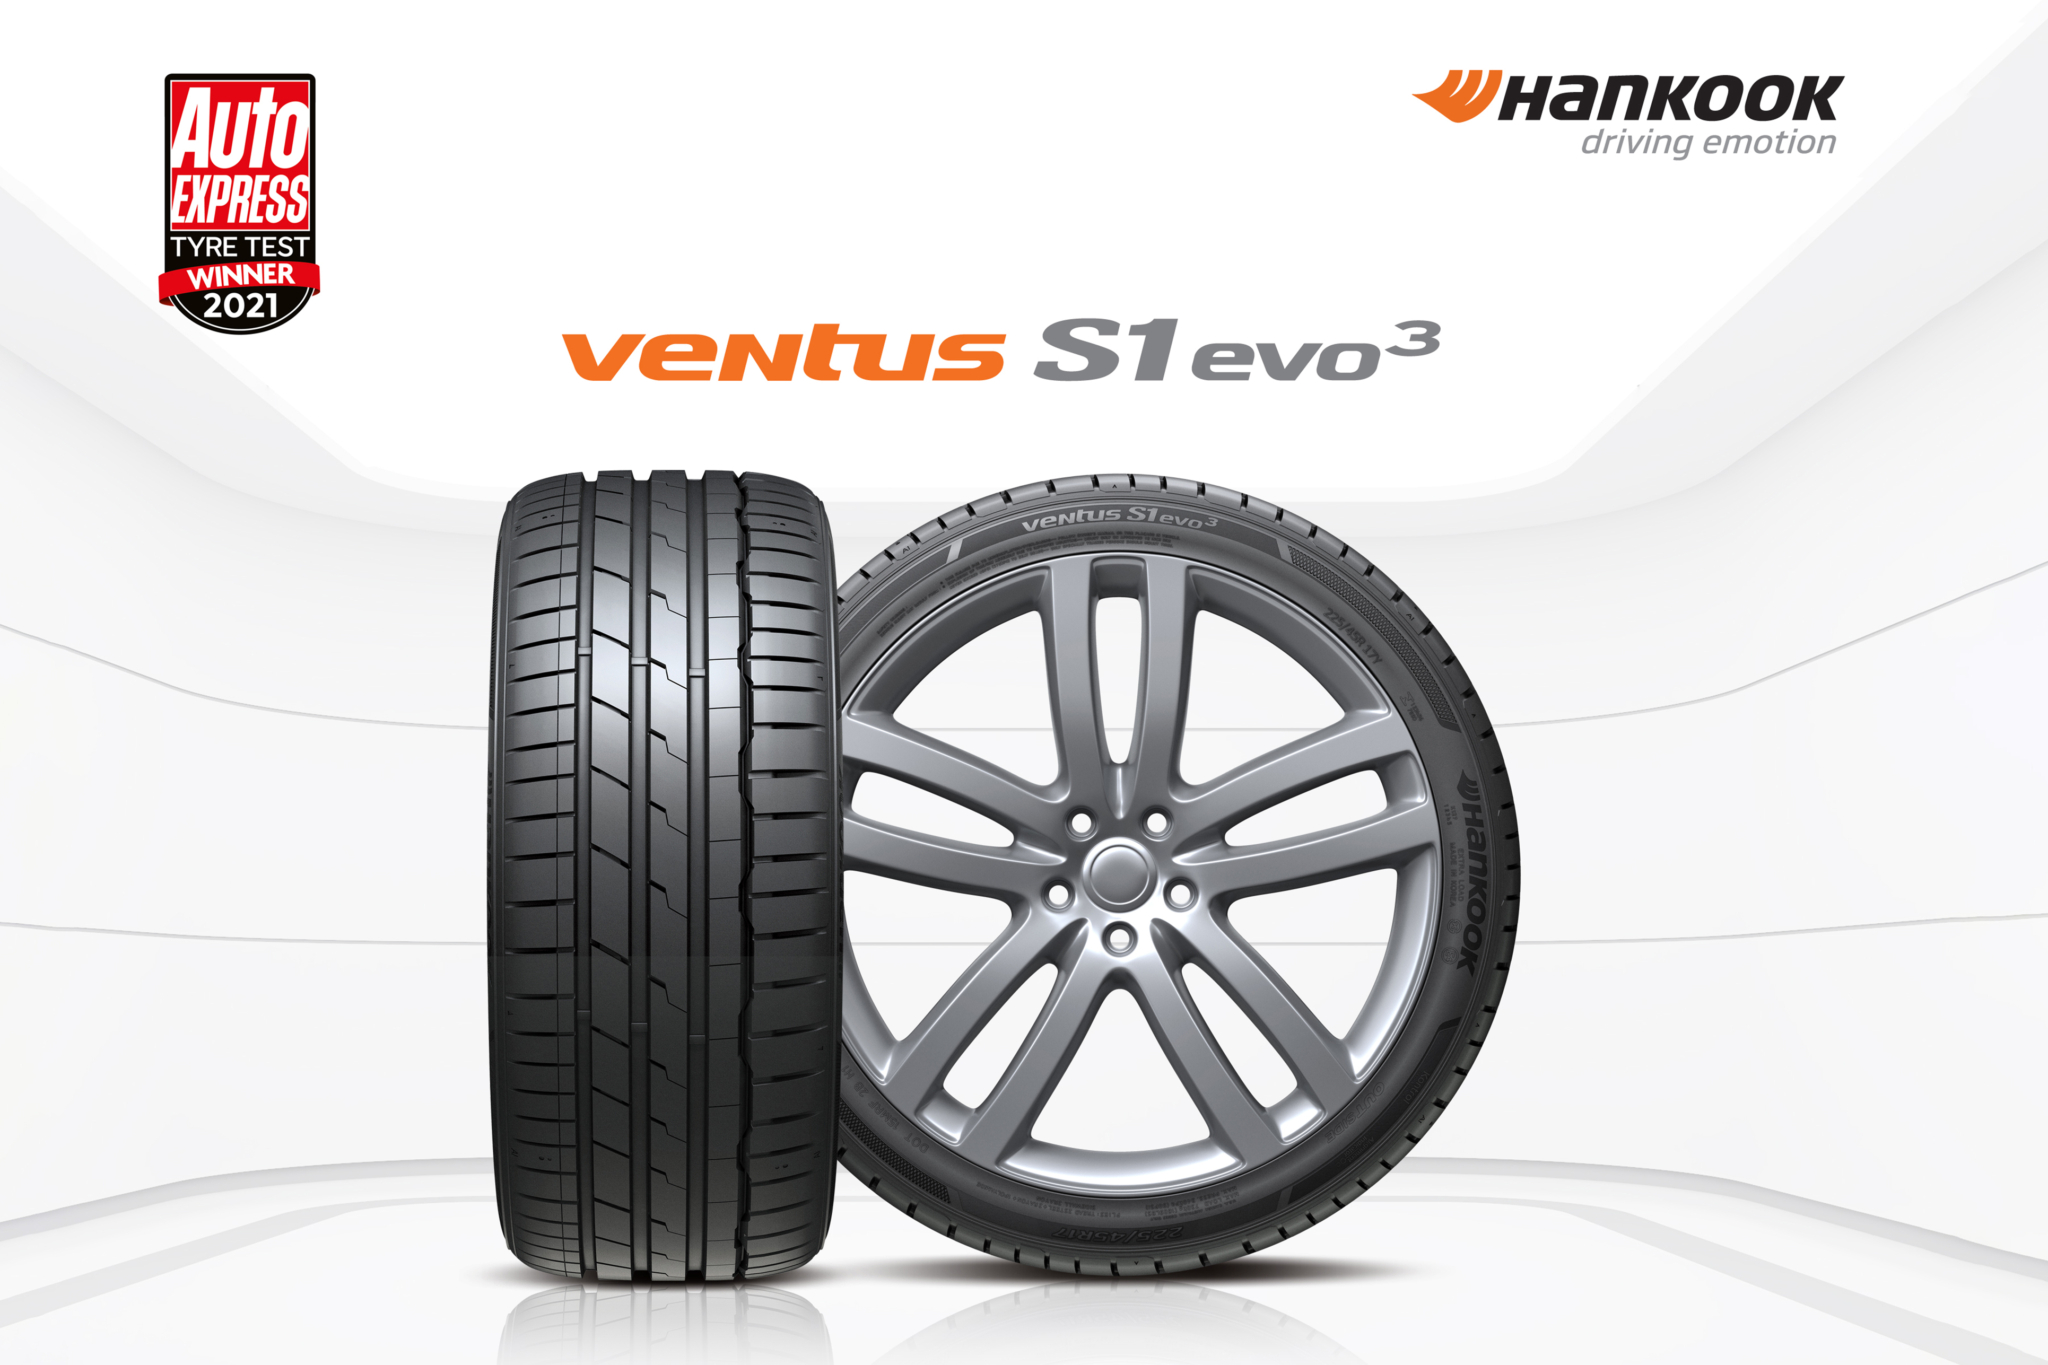 Hankook Ventus S1 evo 3 wins Auto Express 2021 Summer Tyre Test - Tyrepress